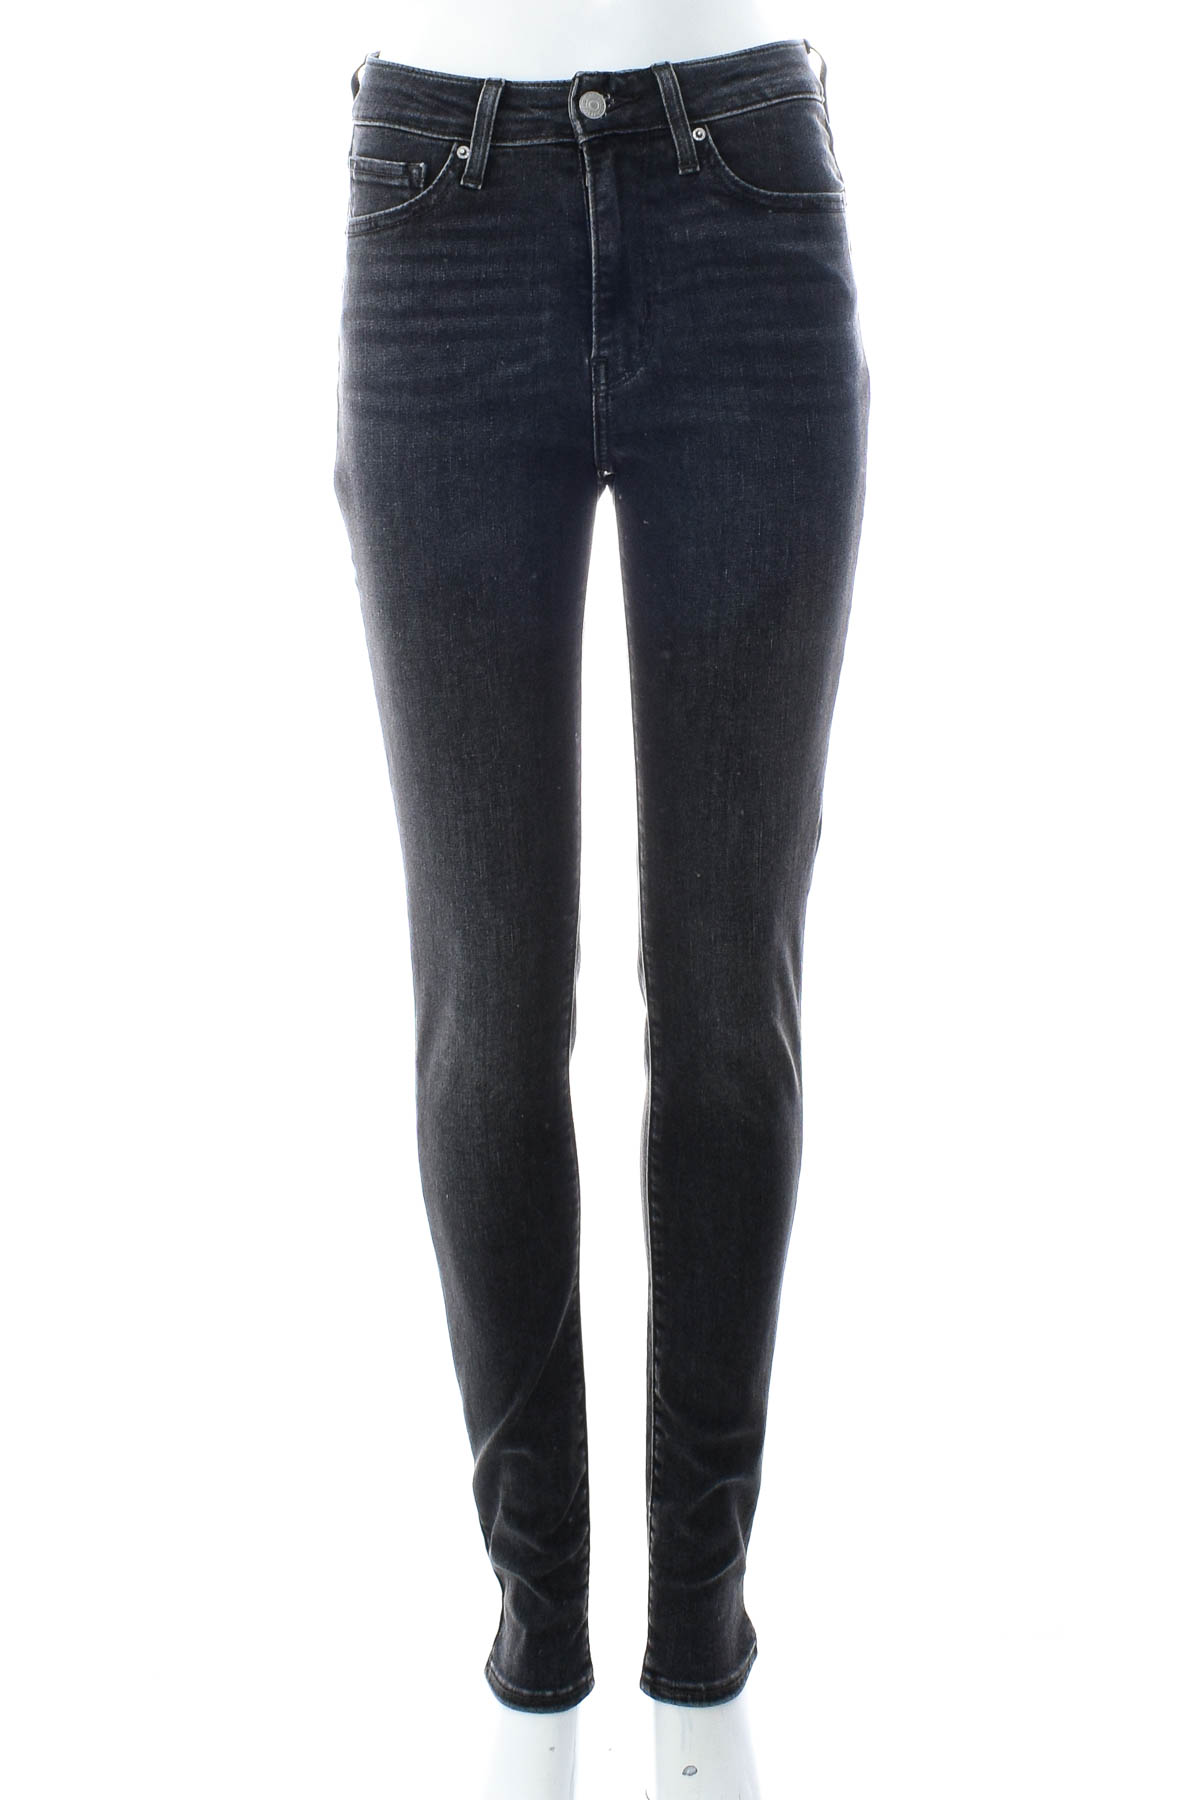 Women's jeans - Levi Strauss & Co - 0